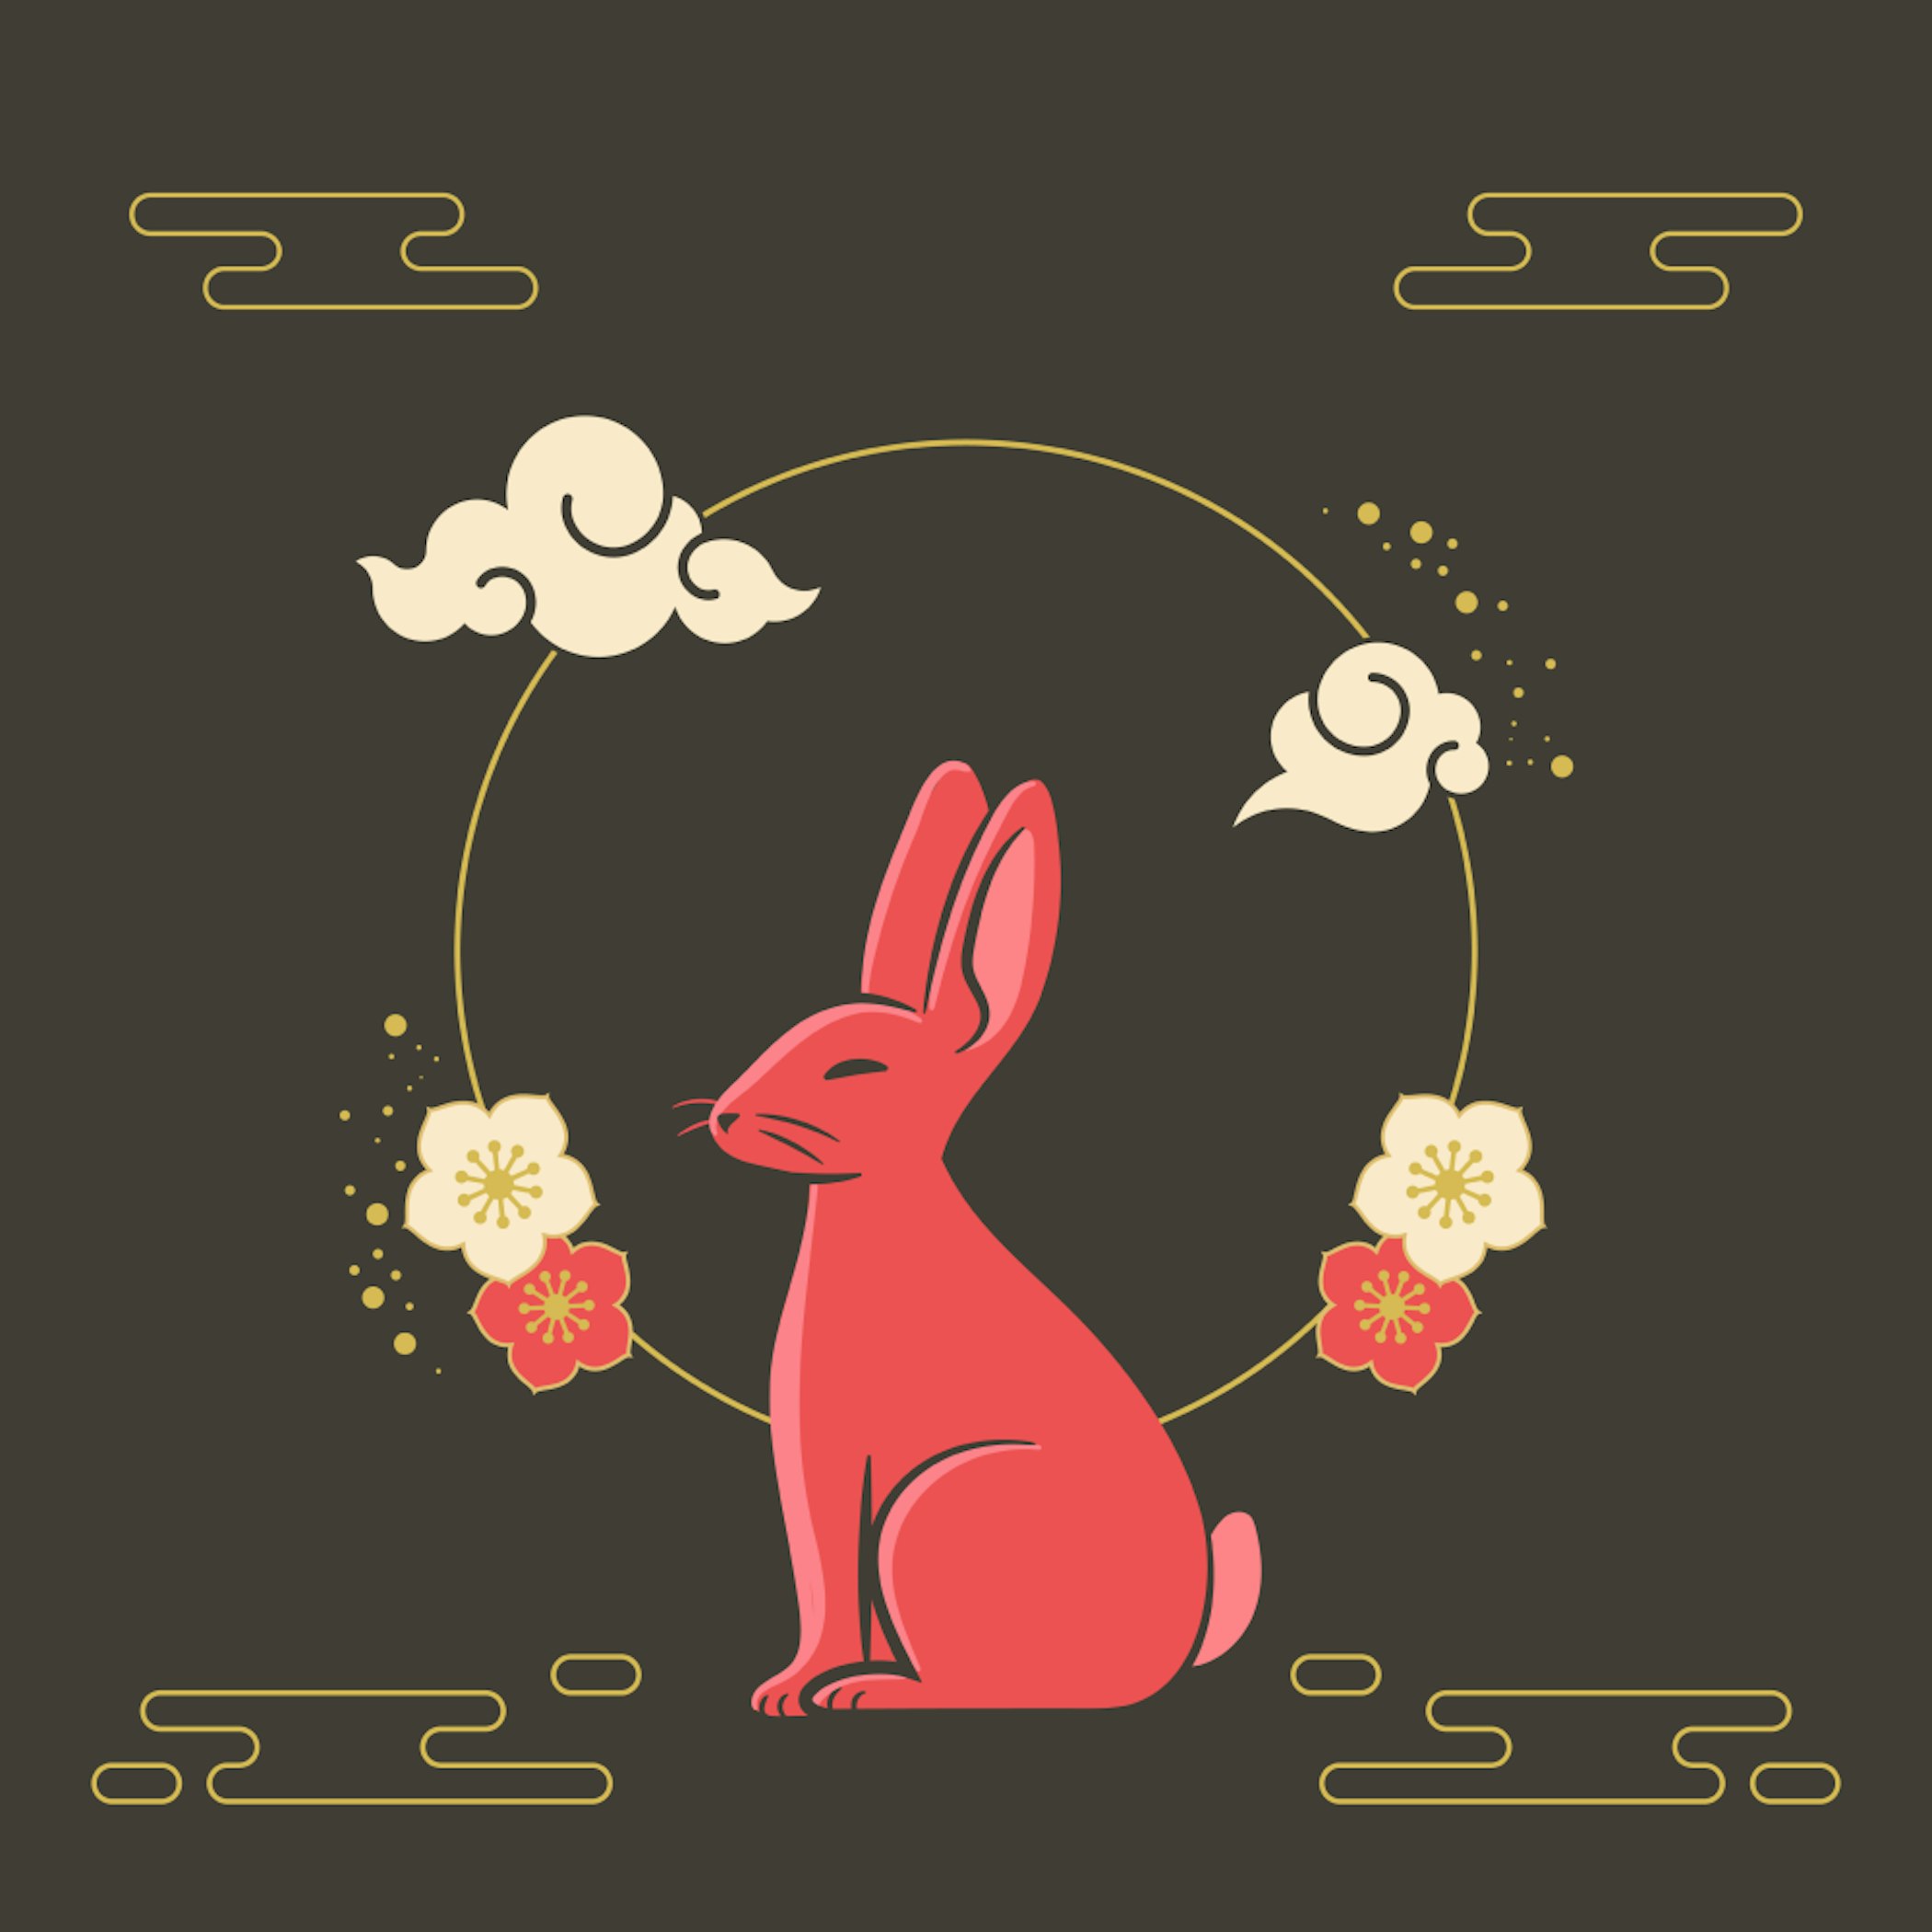 Free Art - Year of the Rabbit Chinese Zodiac - Mixkit